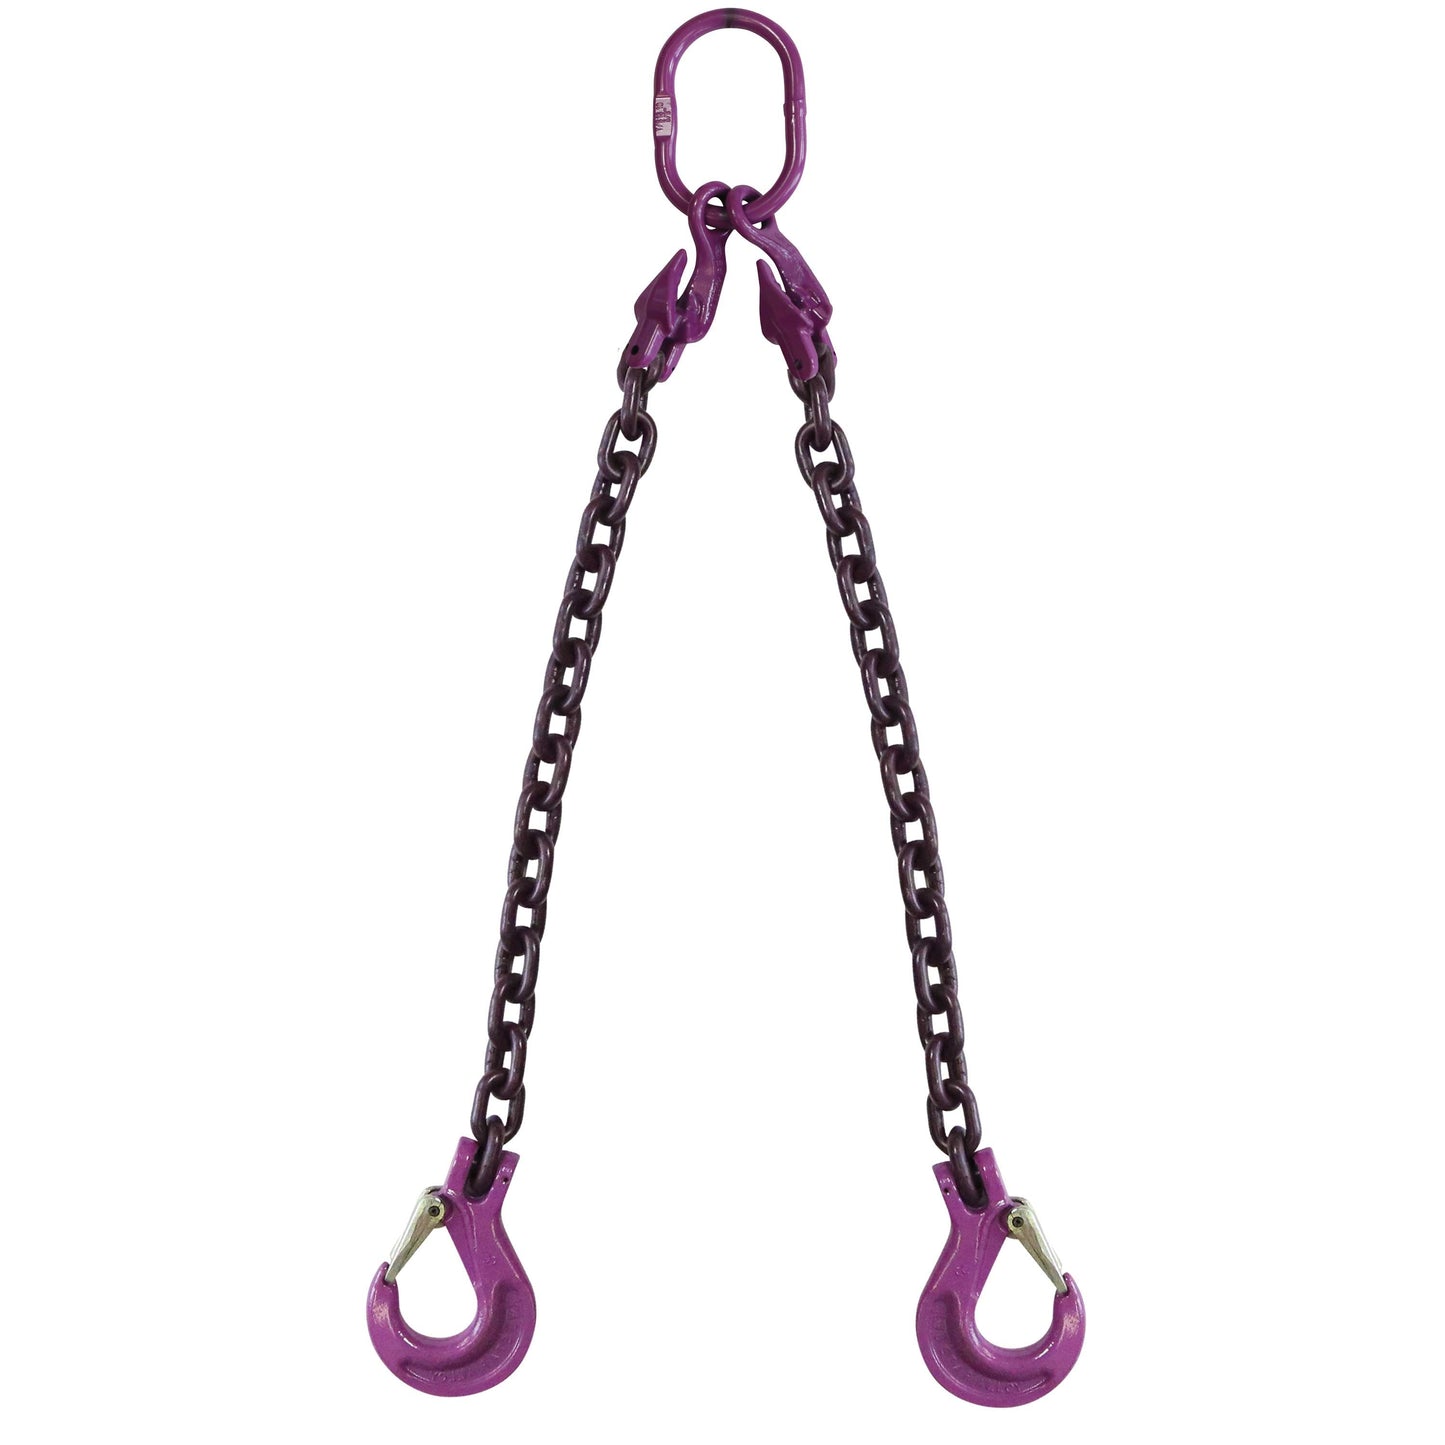 3/8" x 10' - Adjustable 2 Leg Chain Sling w/ Sling Hooks - Grade 100 image 1 of 8